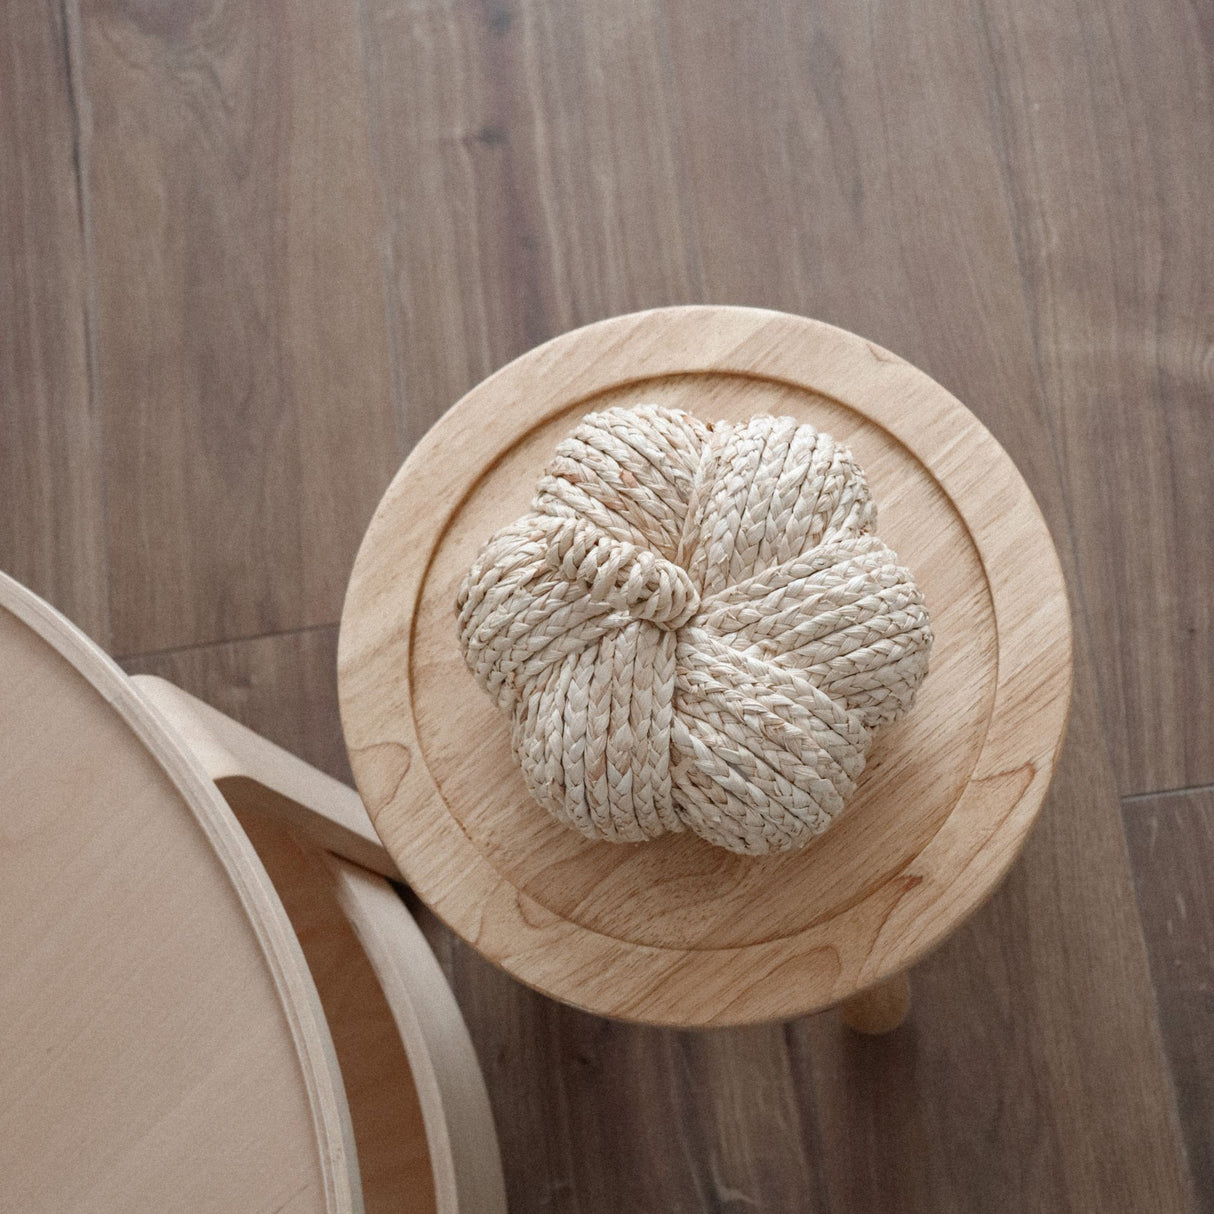 Rustic Small Wooden Stool - Milking stool - Oxford Stool  Masterplank UK   